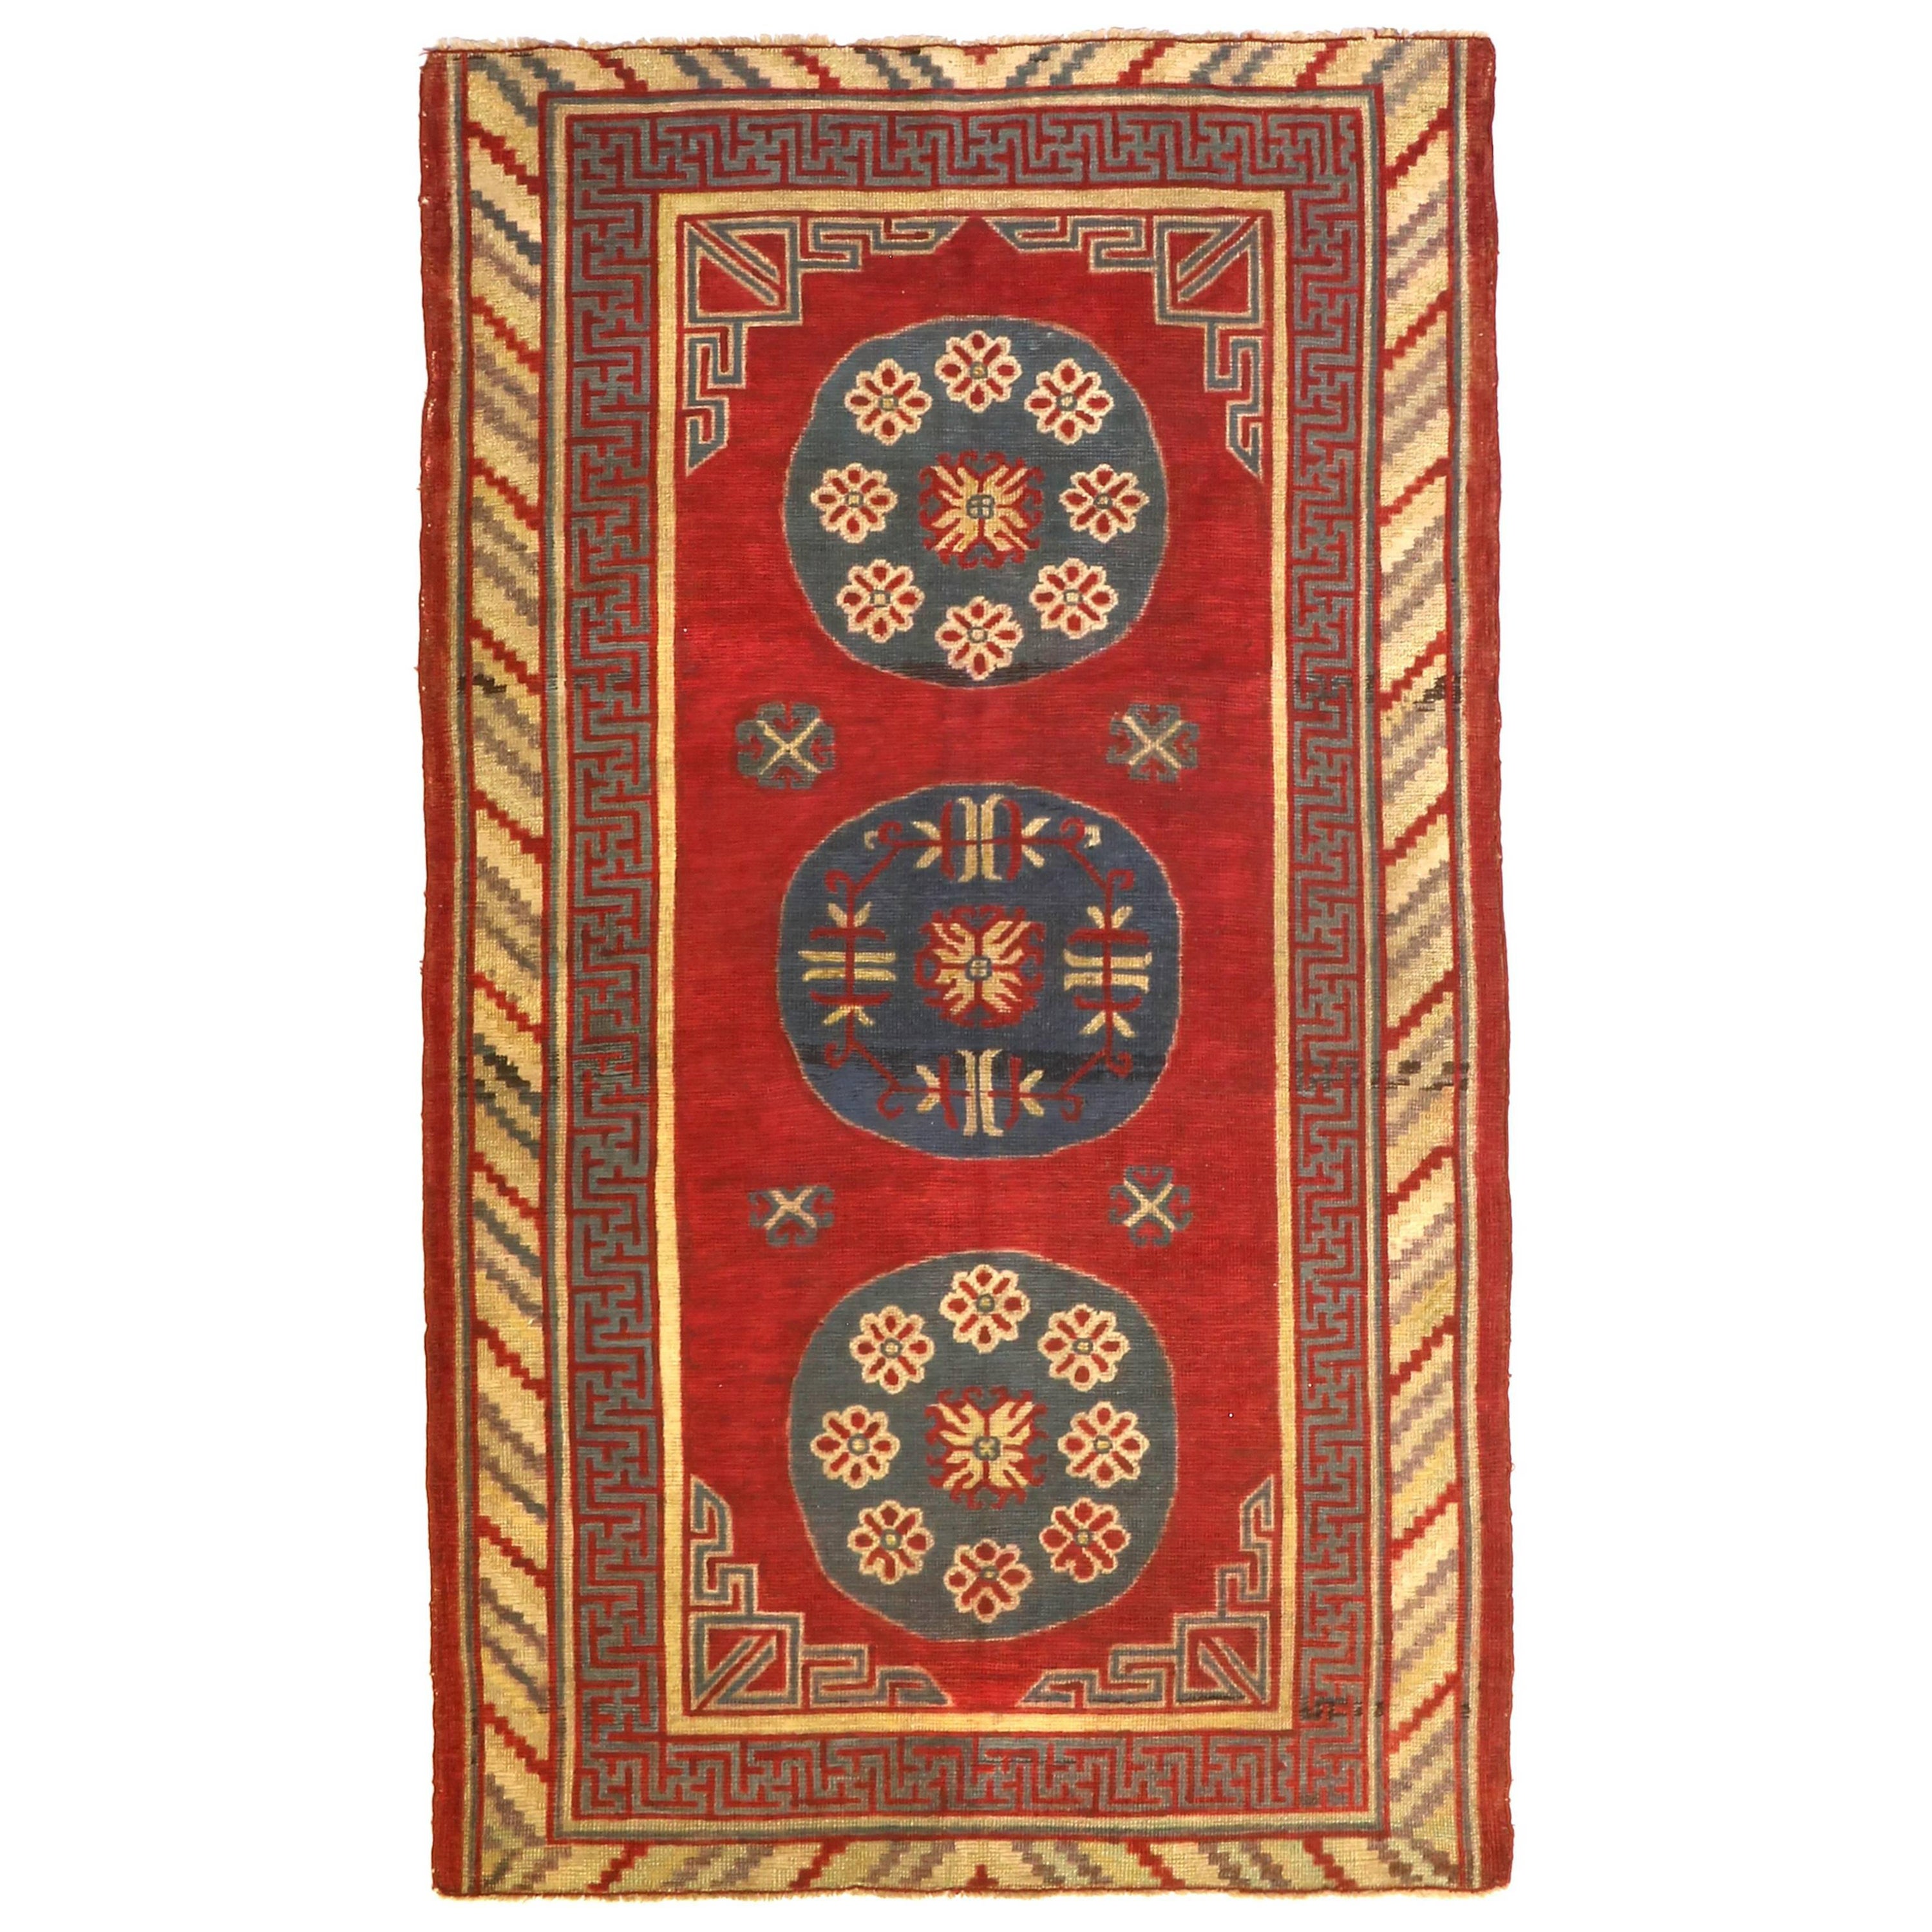 Tapis antique de Samarkand, vers 1900